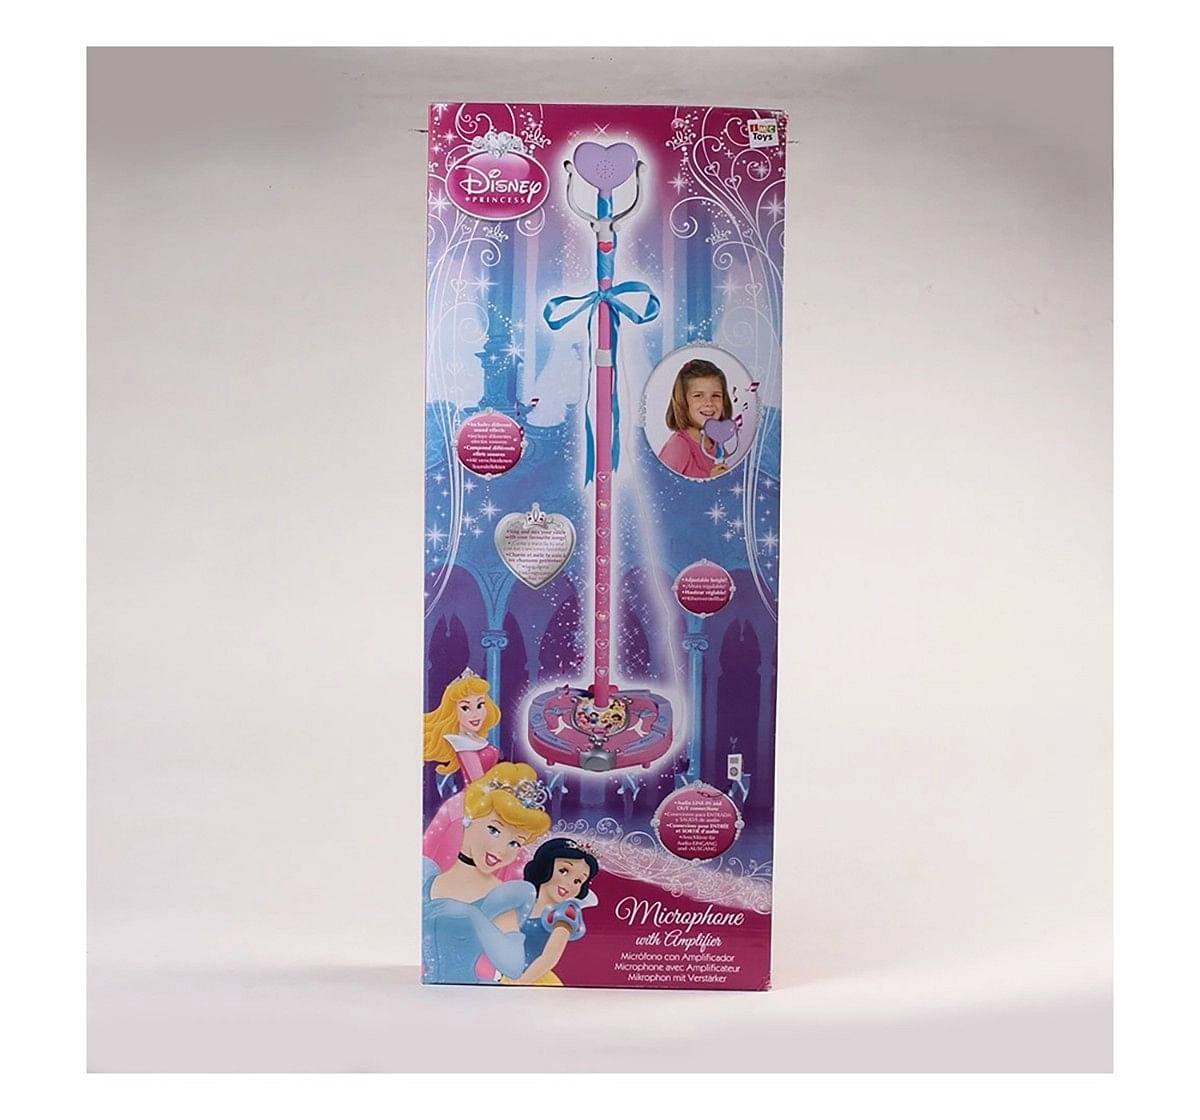 Disney Frozen Microphone Amplifier-Multicolor Mics for Kids age 3Y+ 